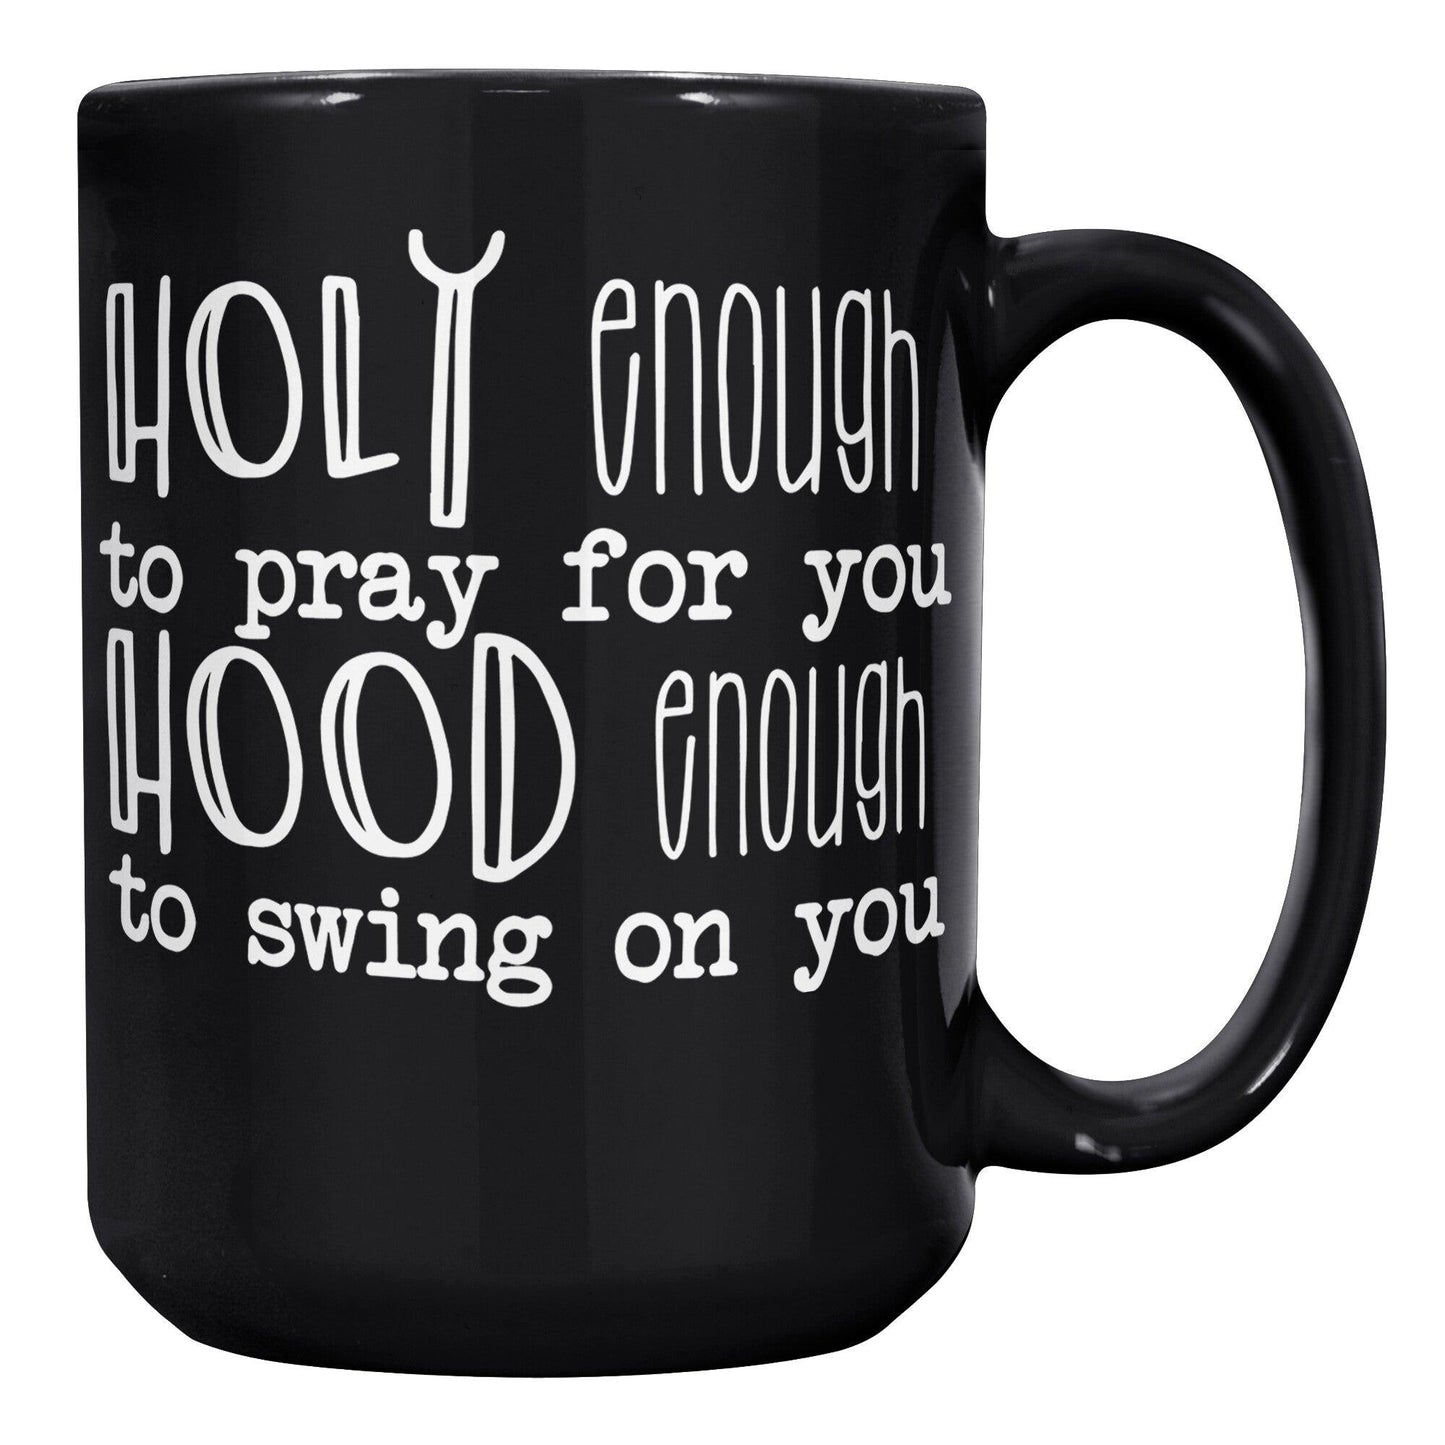 Holy Enough To Pray For You Hood Enough To Swing On You Black Mug - TheGivenGet